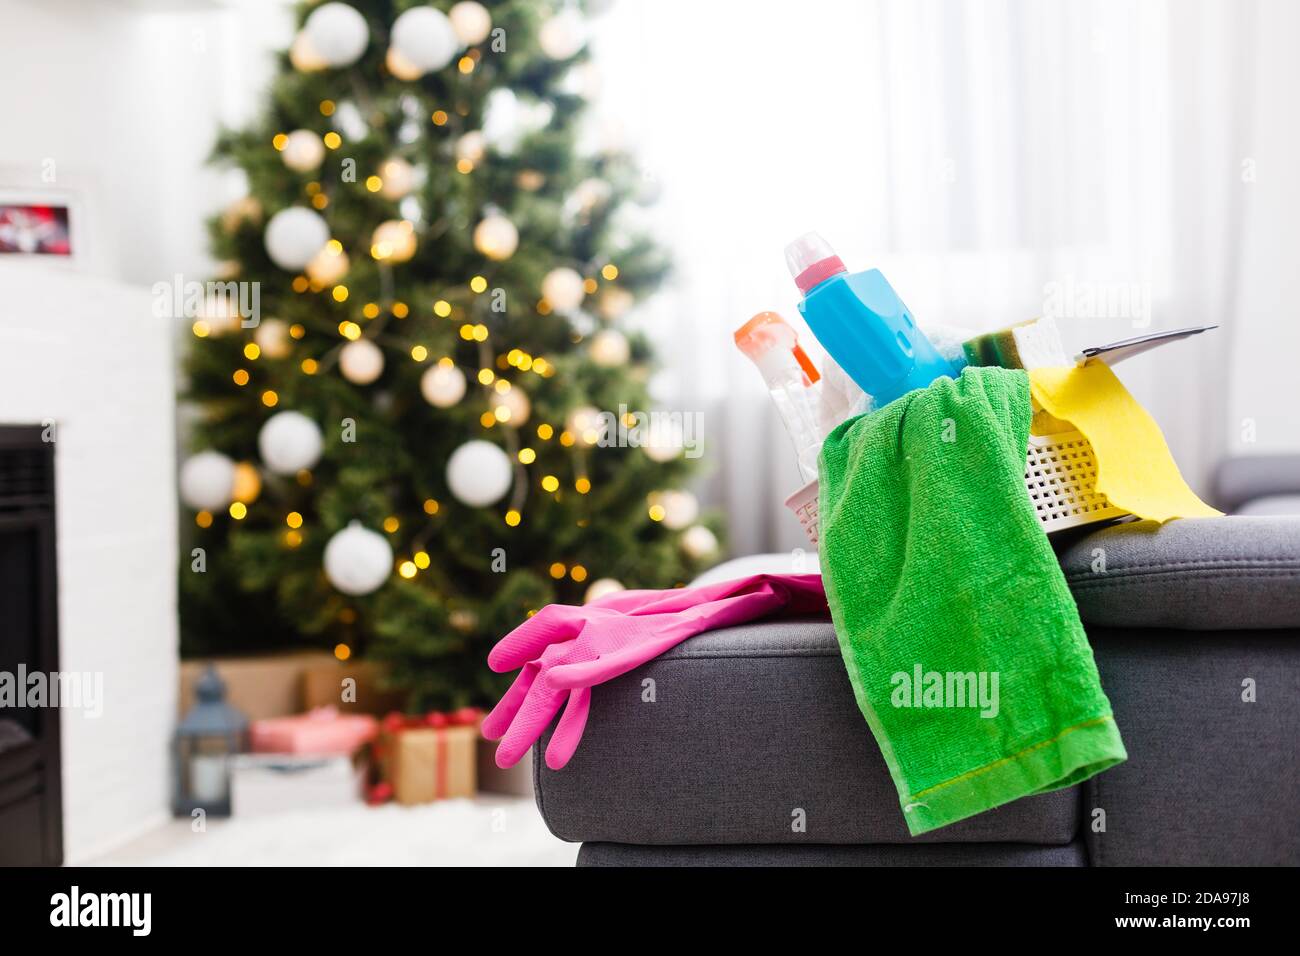 Nettoyage après la fête de Noël Photo Stock - Alamy